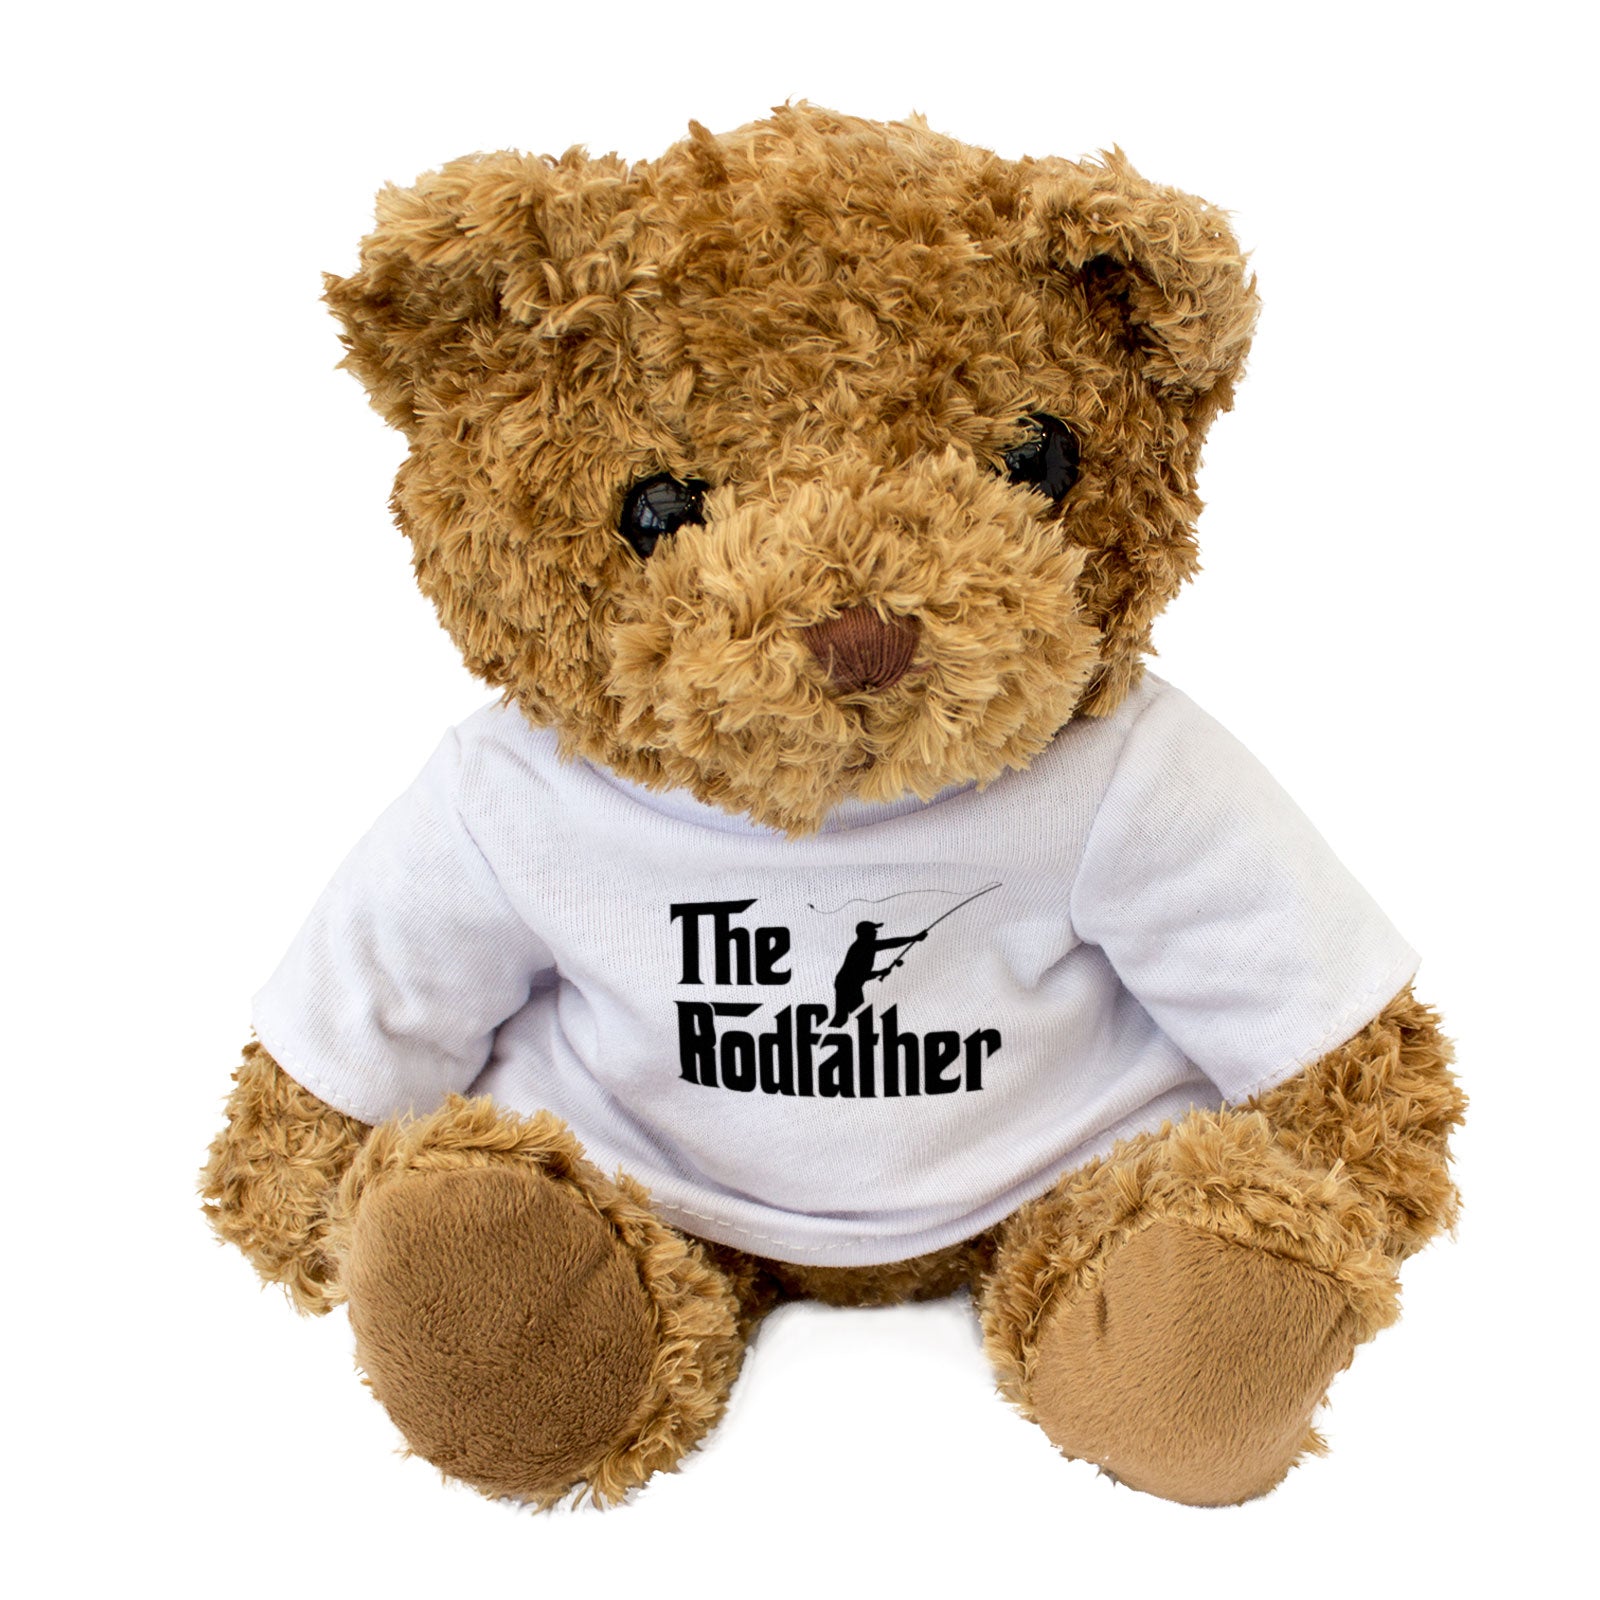 The Rodfather - Teddy Bear